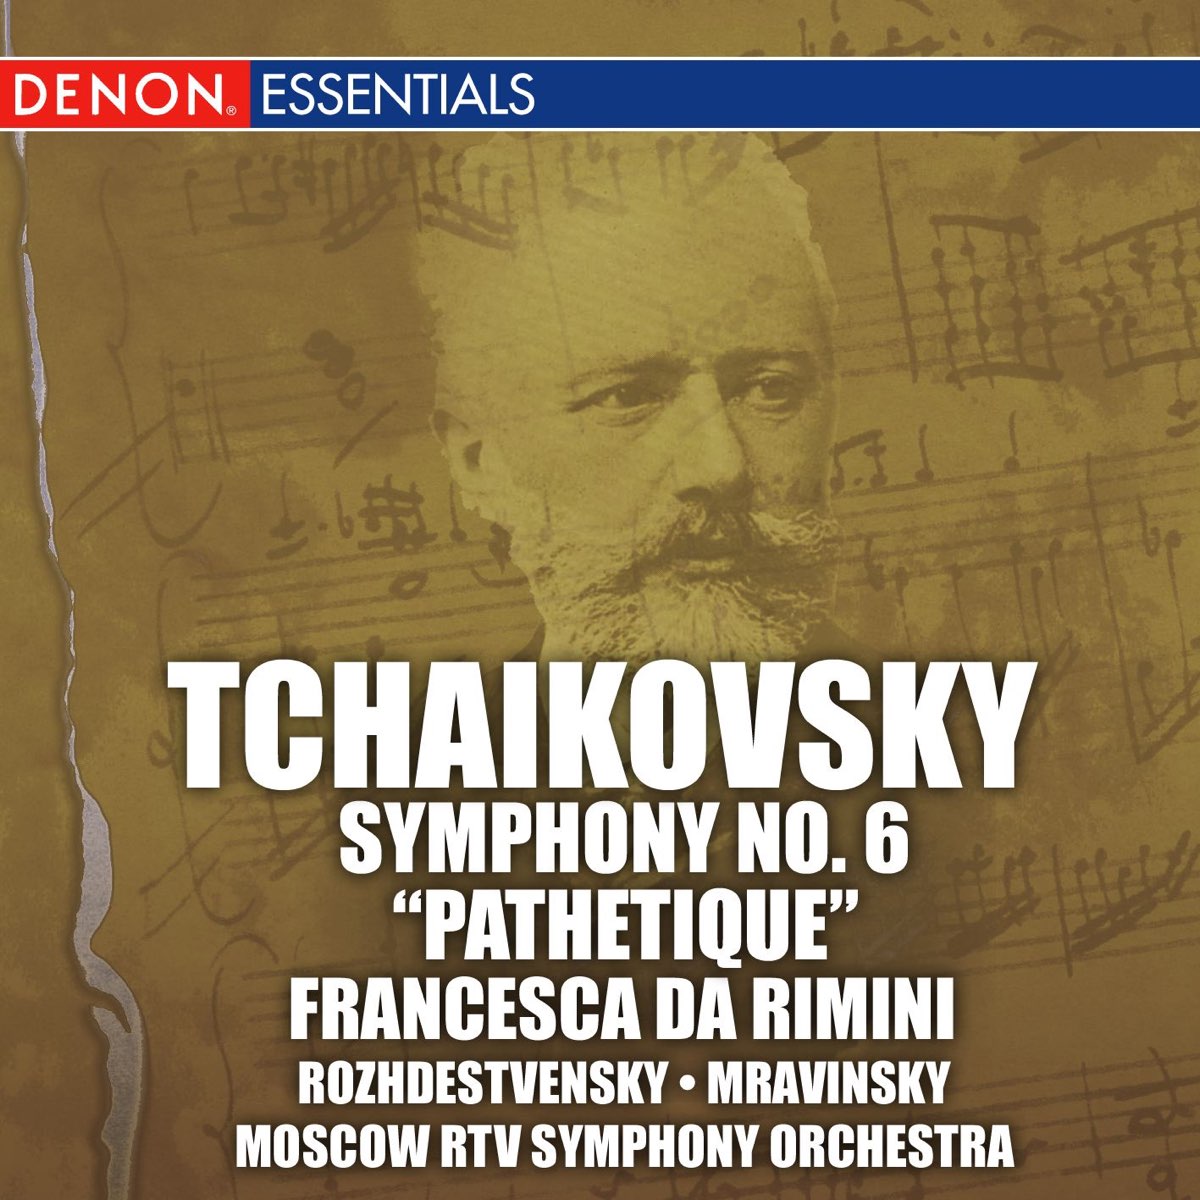 Tchaikovsky Symphony No 6 Francesca Da Rimini By Moscow Rtv Symphony Orchestra Guennadi Rozhdestvensky Leningrad Philharmonic Orchestra Yevgeni Mravinsky On Apple Music